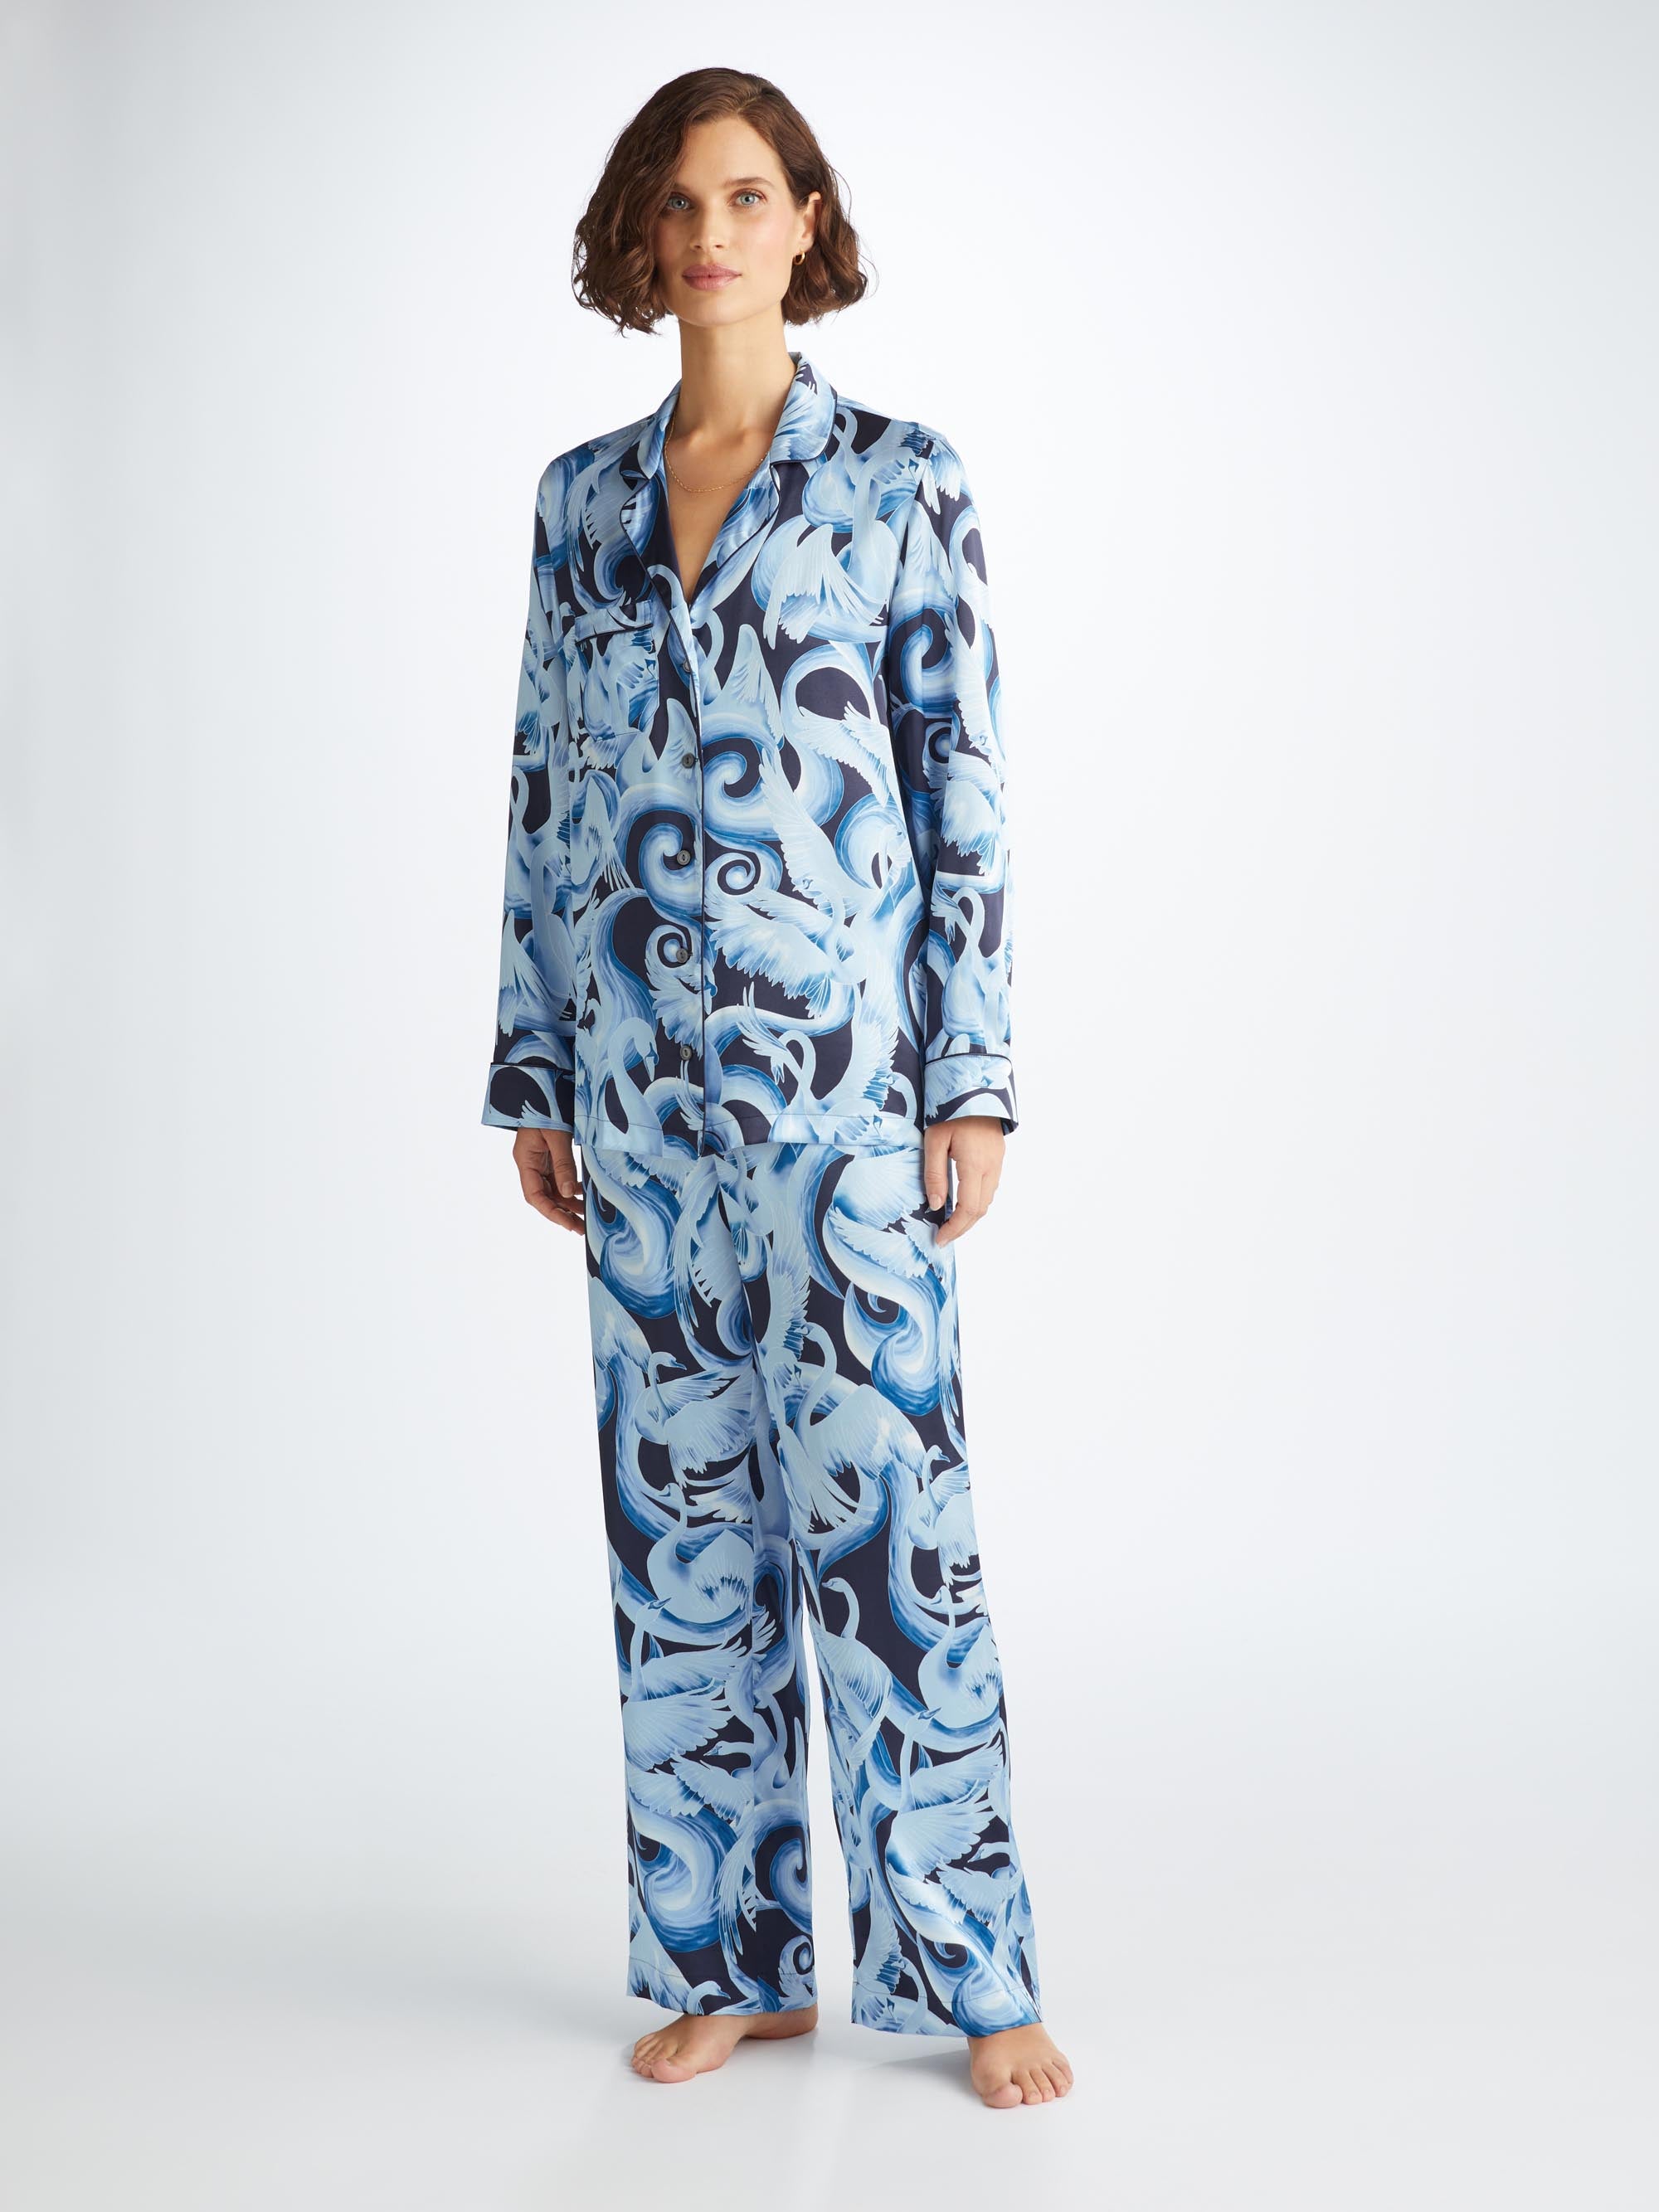 Women's Pyjamas Brindisi 104 Silk Satin Navy